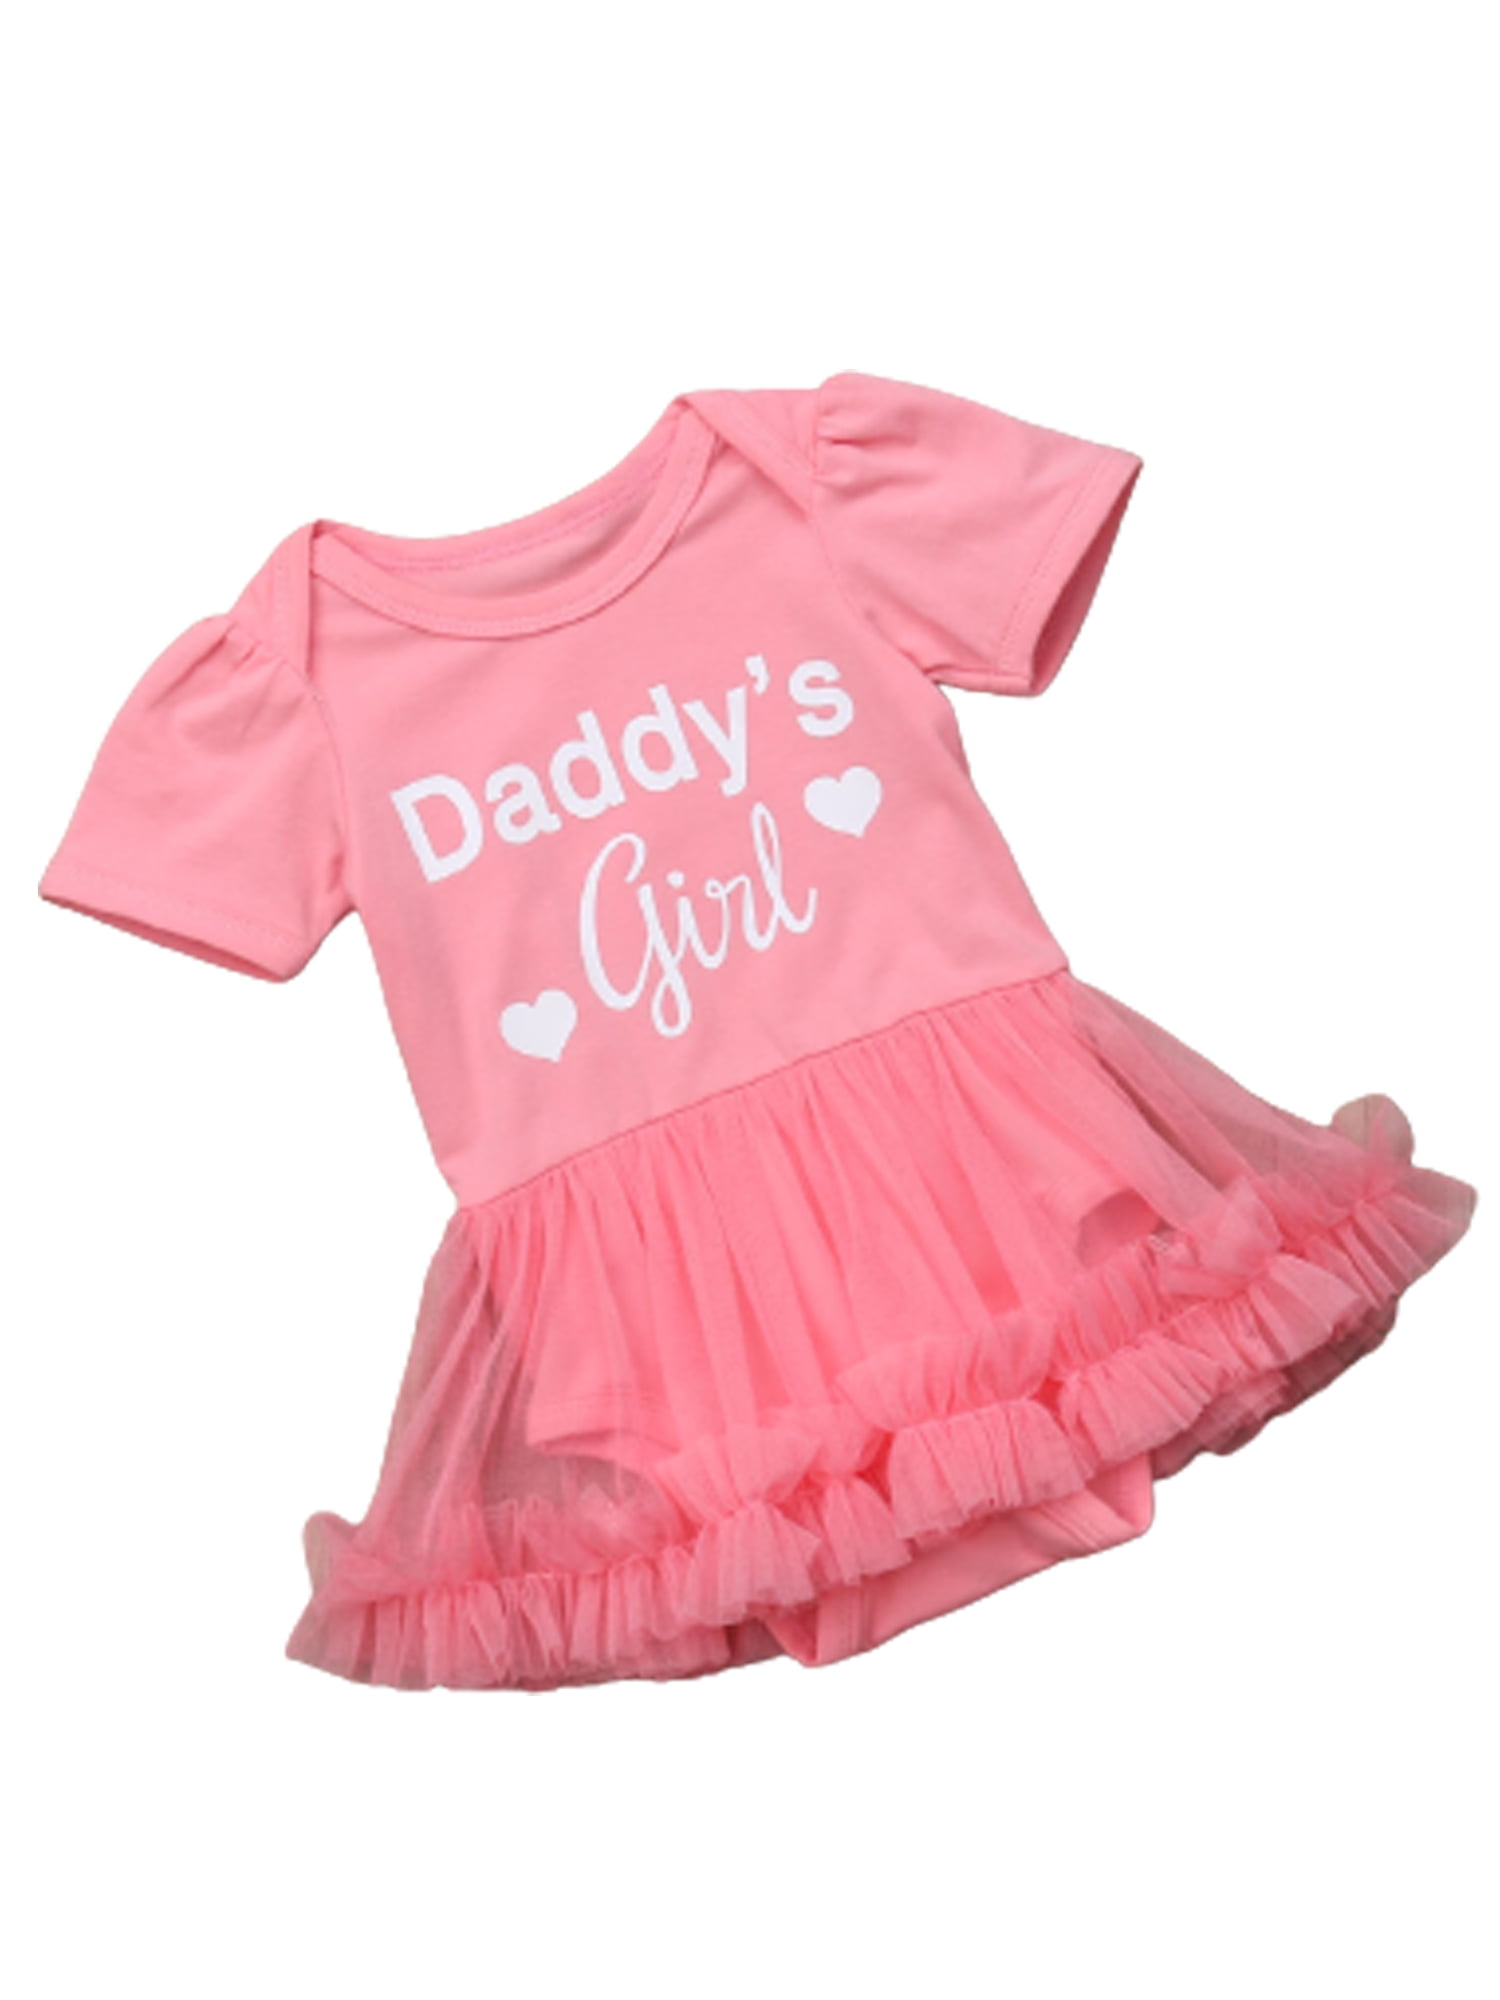 White Rainbow Dot Baby Dress Romper Jumpsuit PRINCESS Hot Pink Skirt NB-12Month 